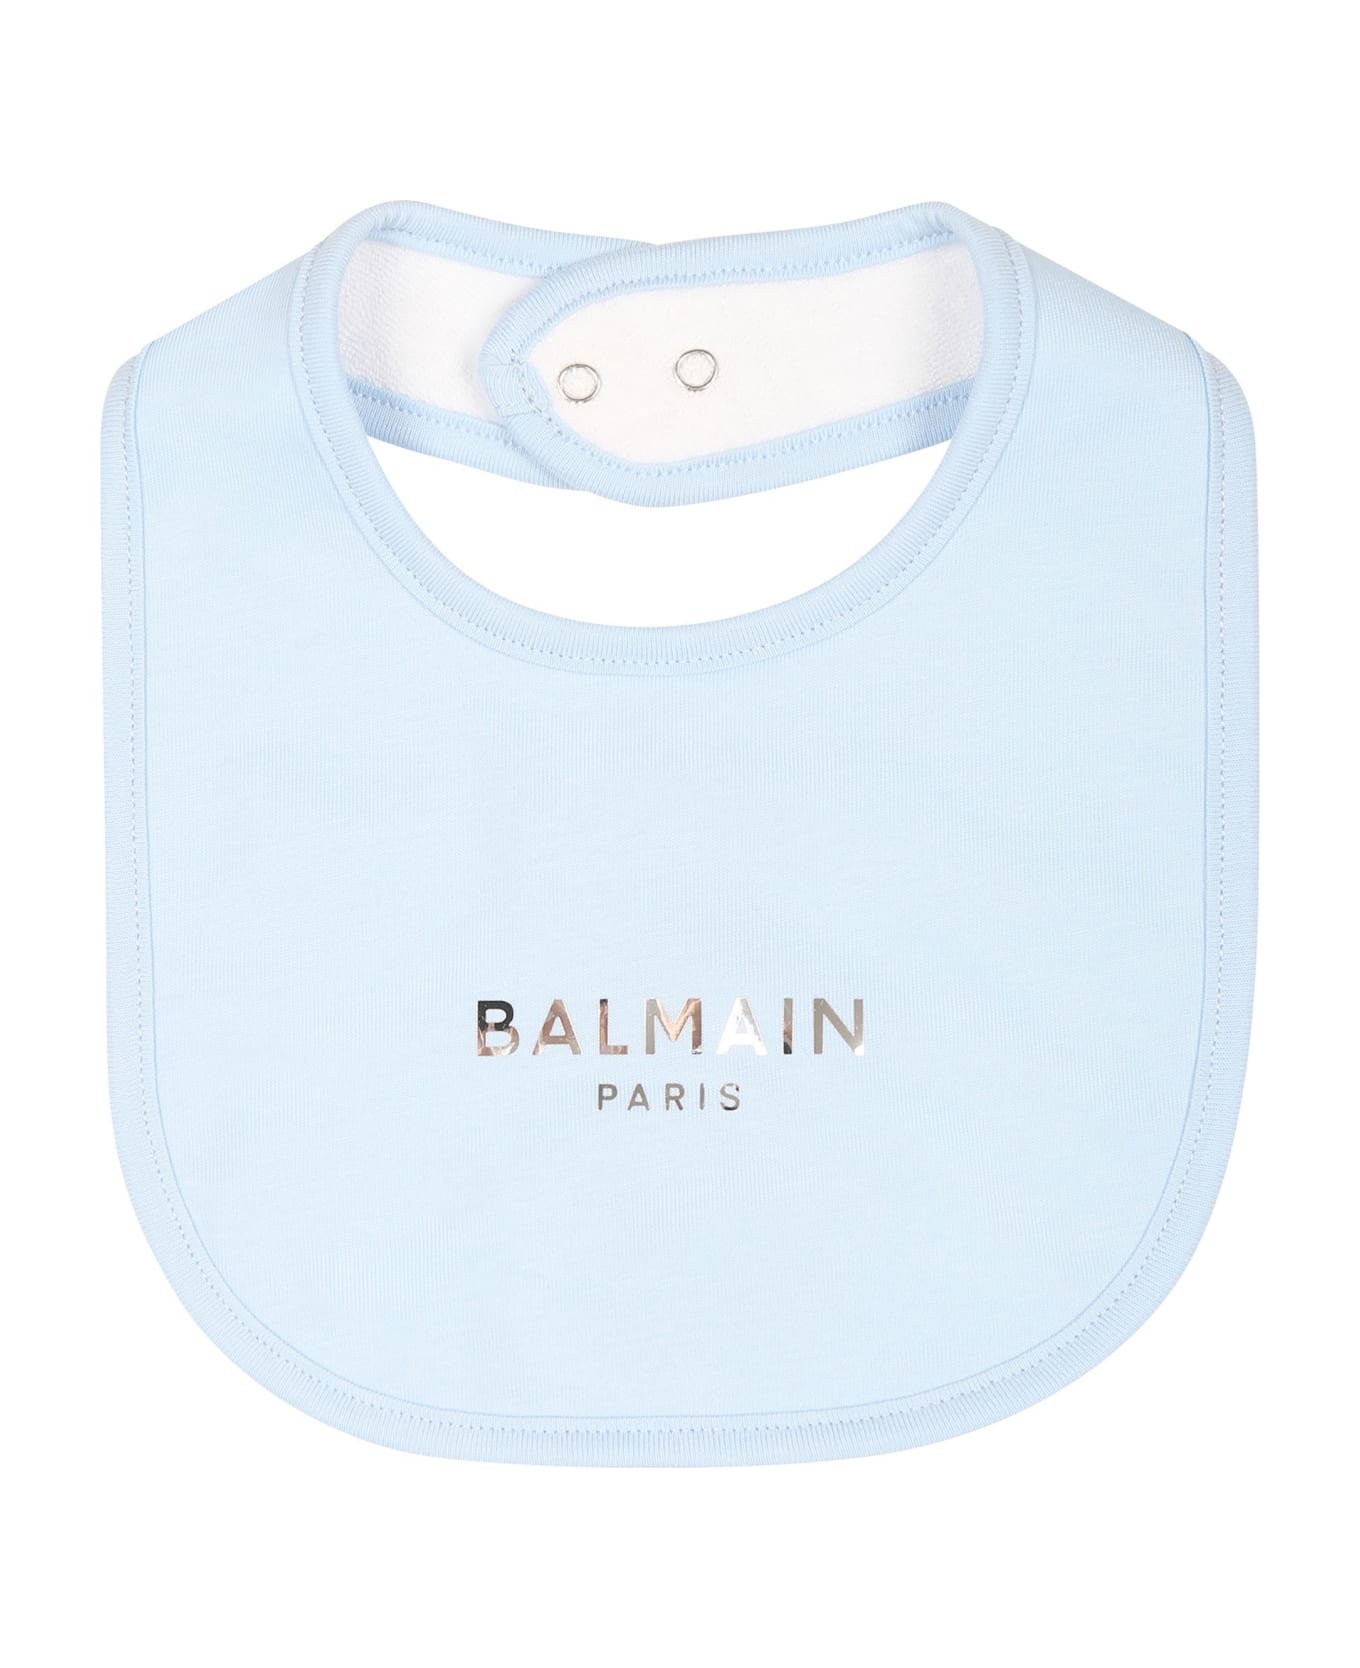 Balmain Light Blue Set For Baby Boy With Logo - Light Blue